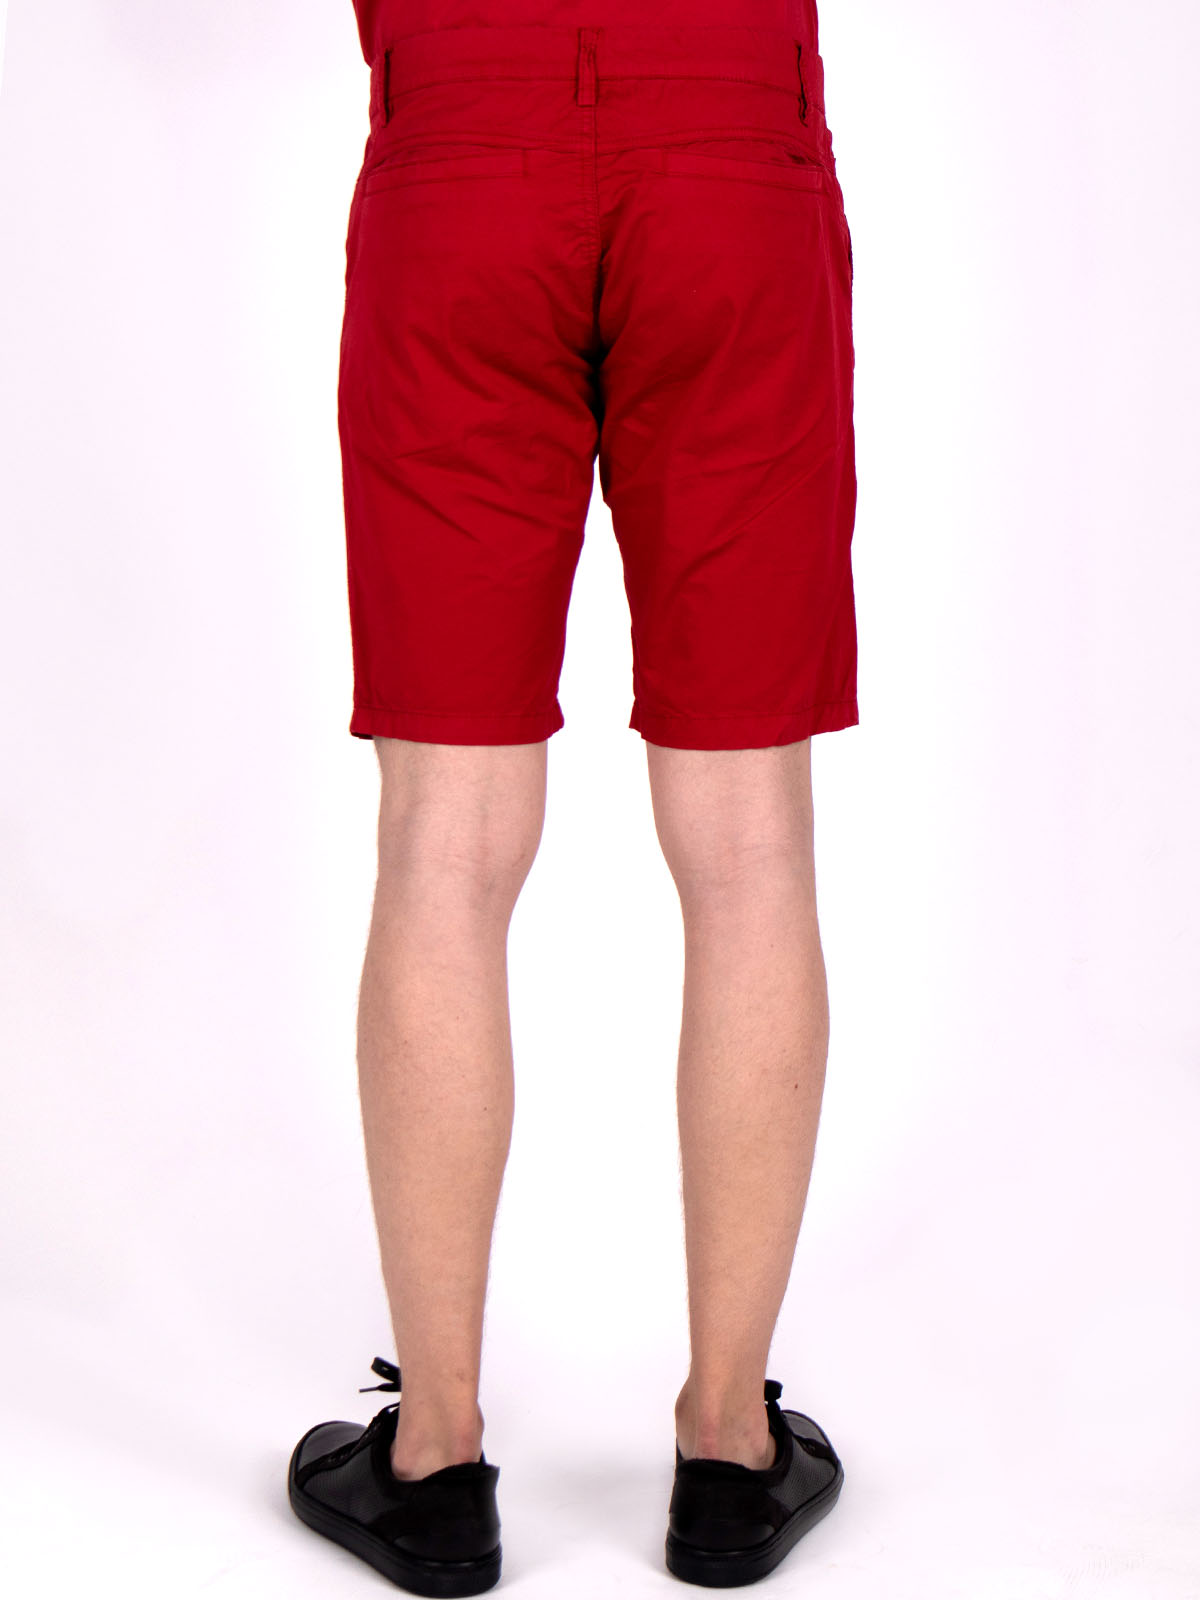  pantaloni scurți roșii  - 67062 € 27.00 img3